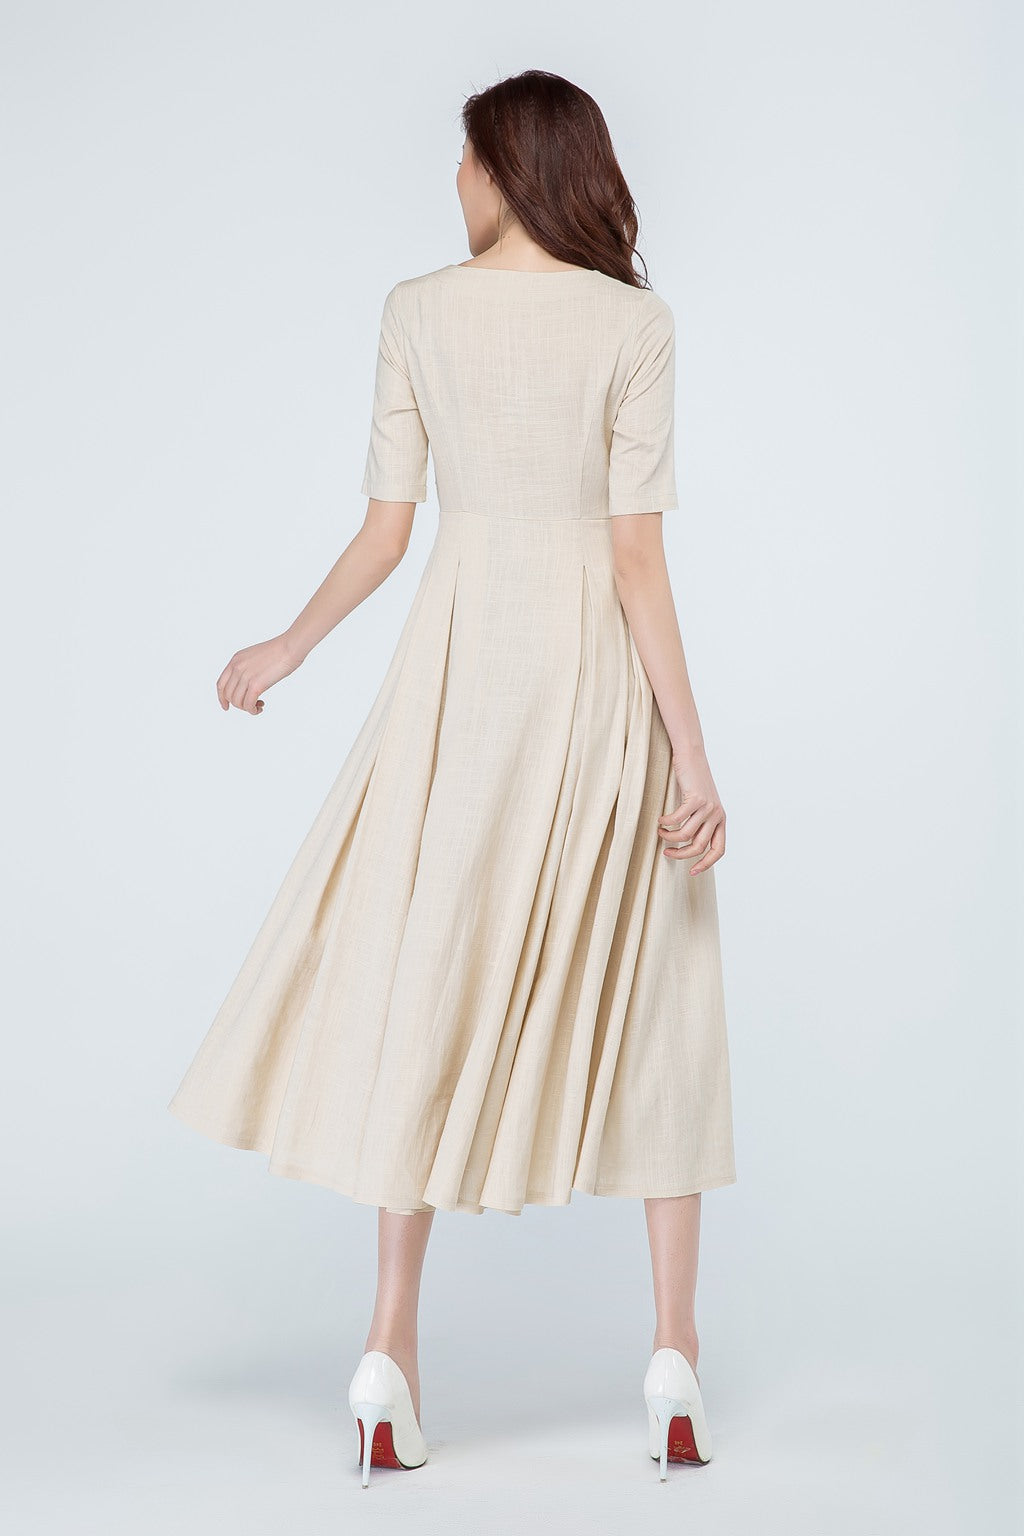 pleated dress